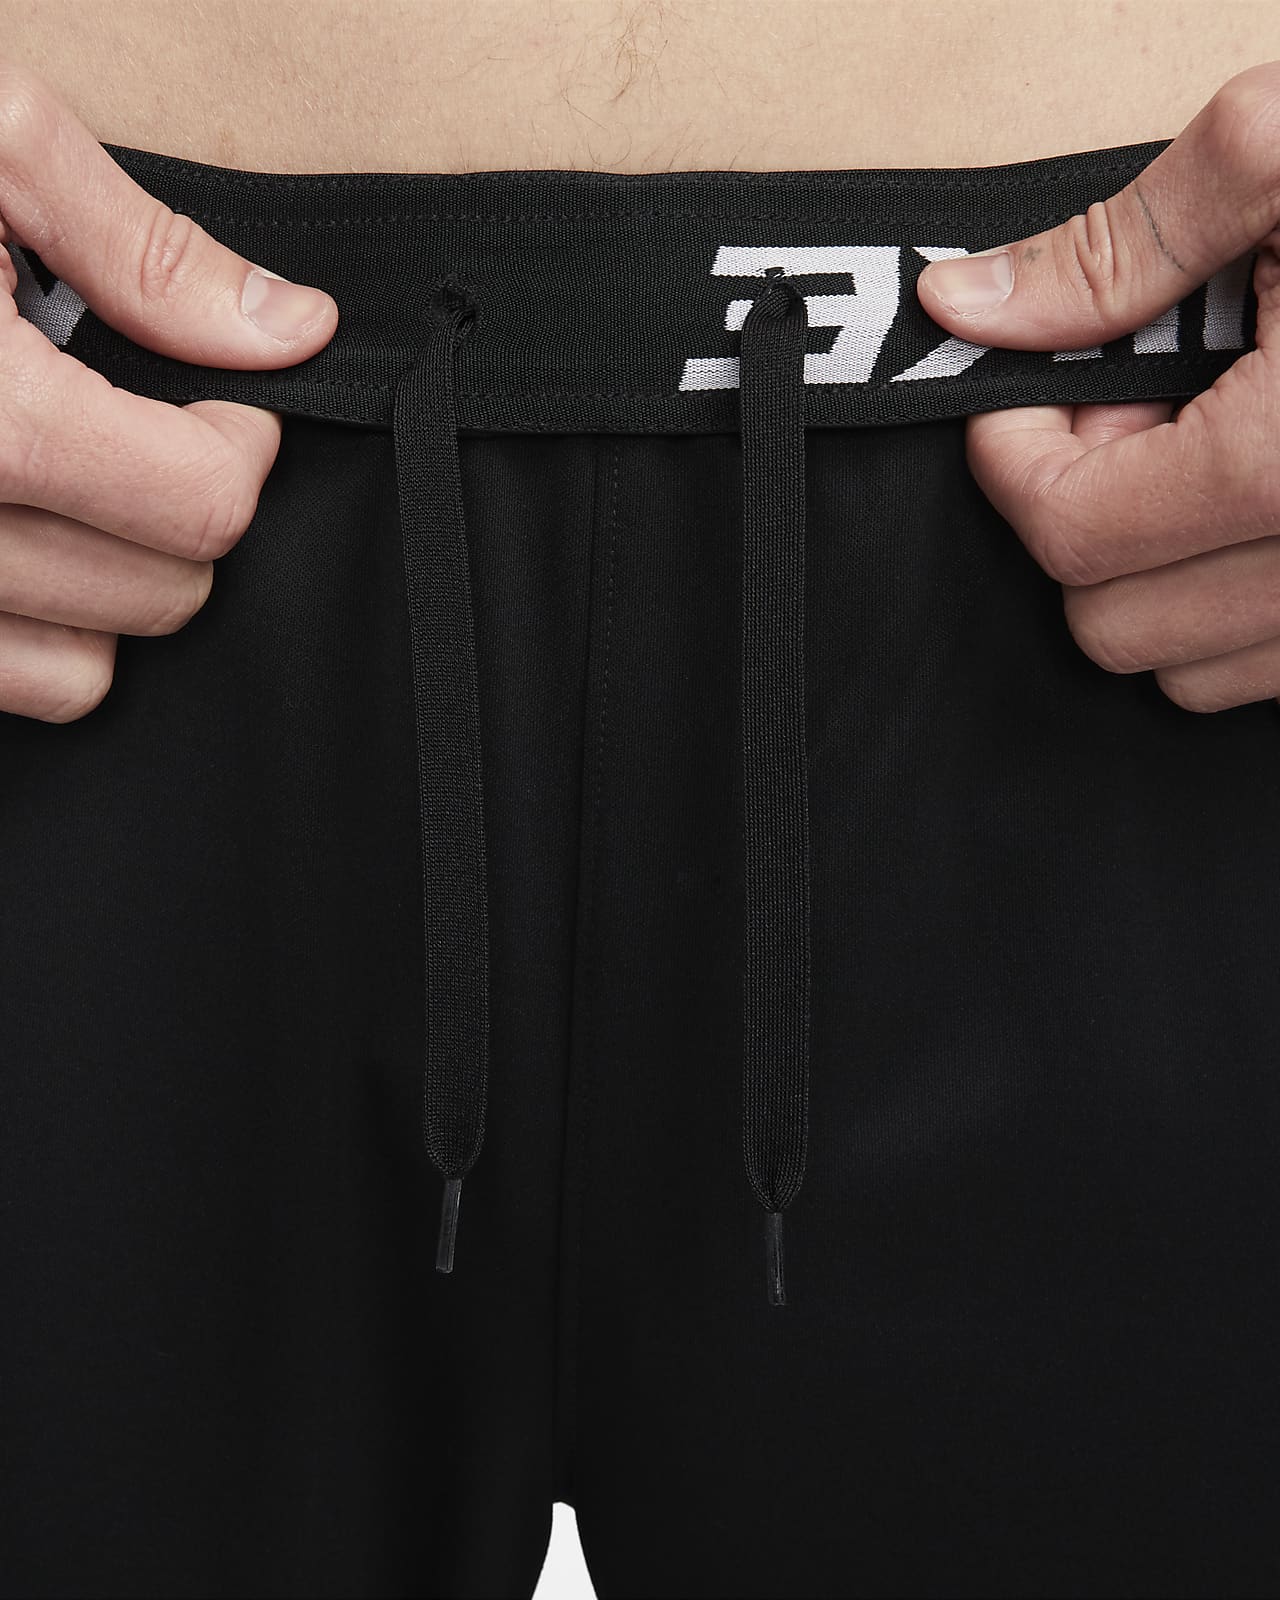 Nike Dri-Fit Swoosh Tapered Long Pants Black